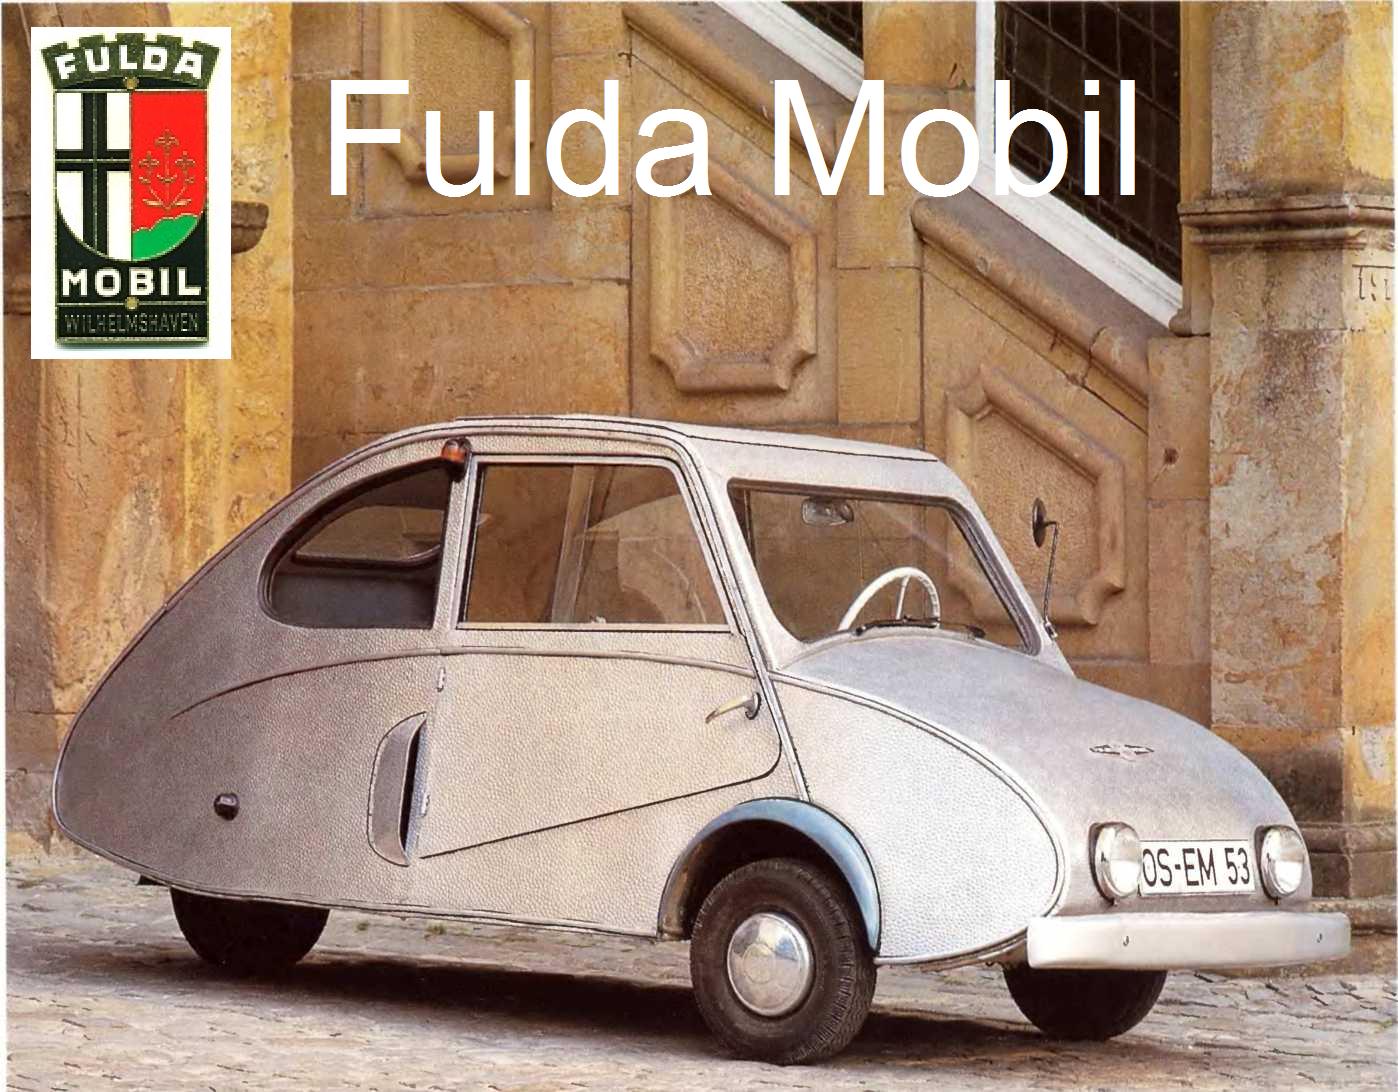 Fulda Mobil The Car Wallpaper Mania Wiki FANDOM Powered By Wikia